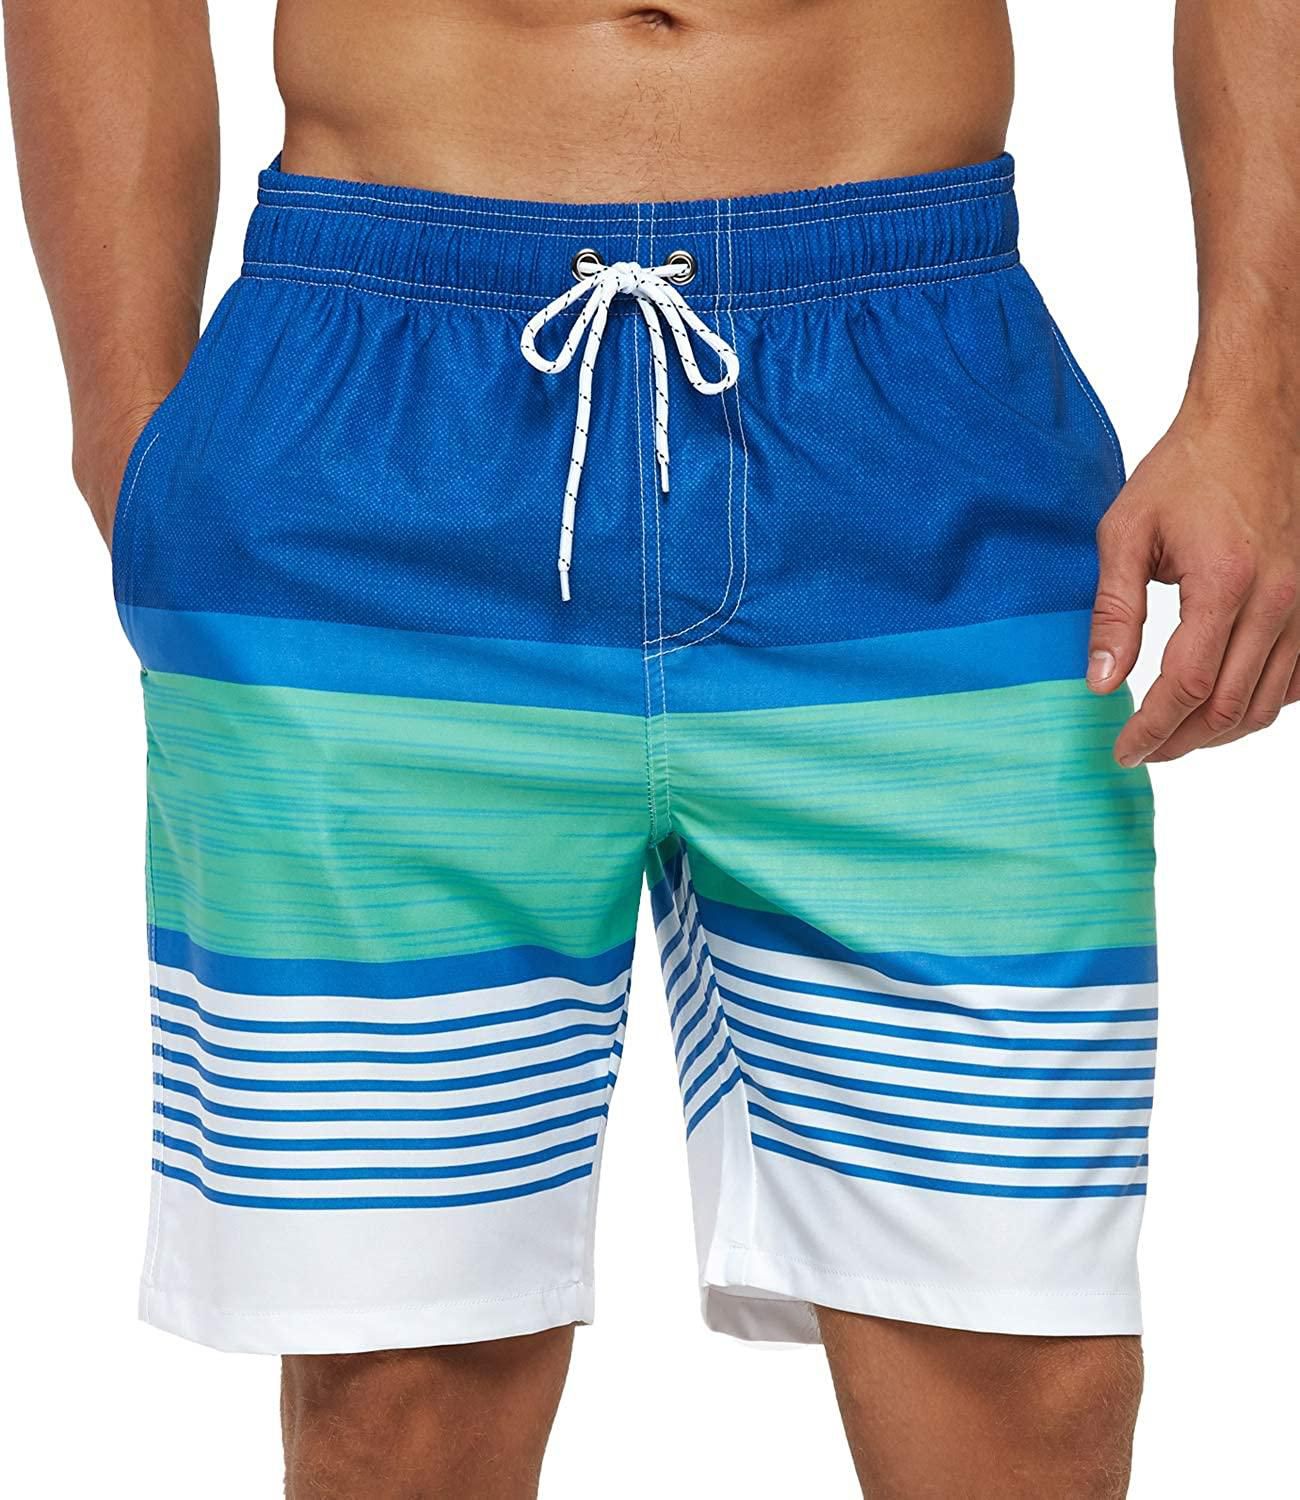 Buy SILKWORLD Men's Swim Shorts Quick Dry Bathing Beach Trunks Swimwear ...